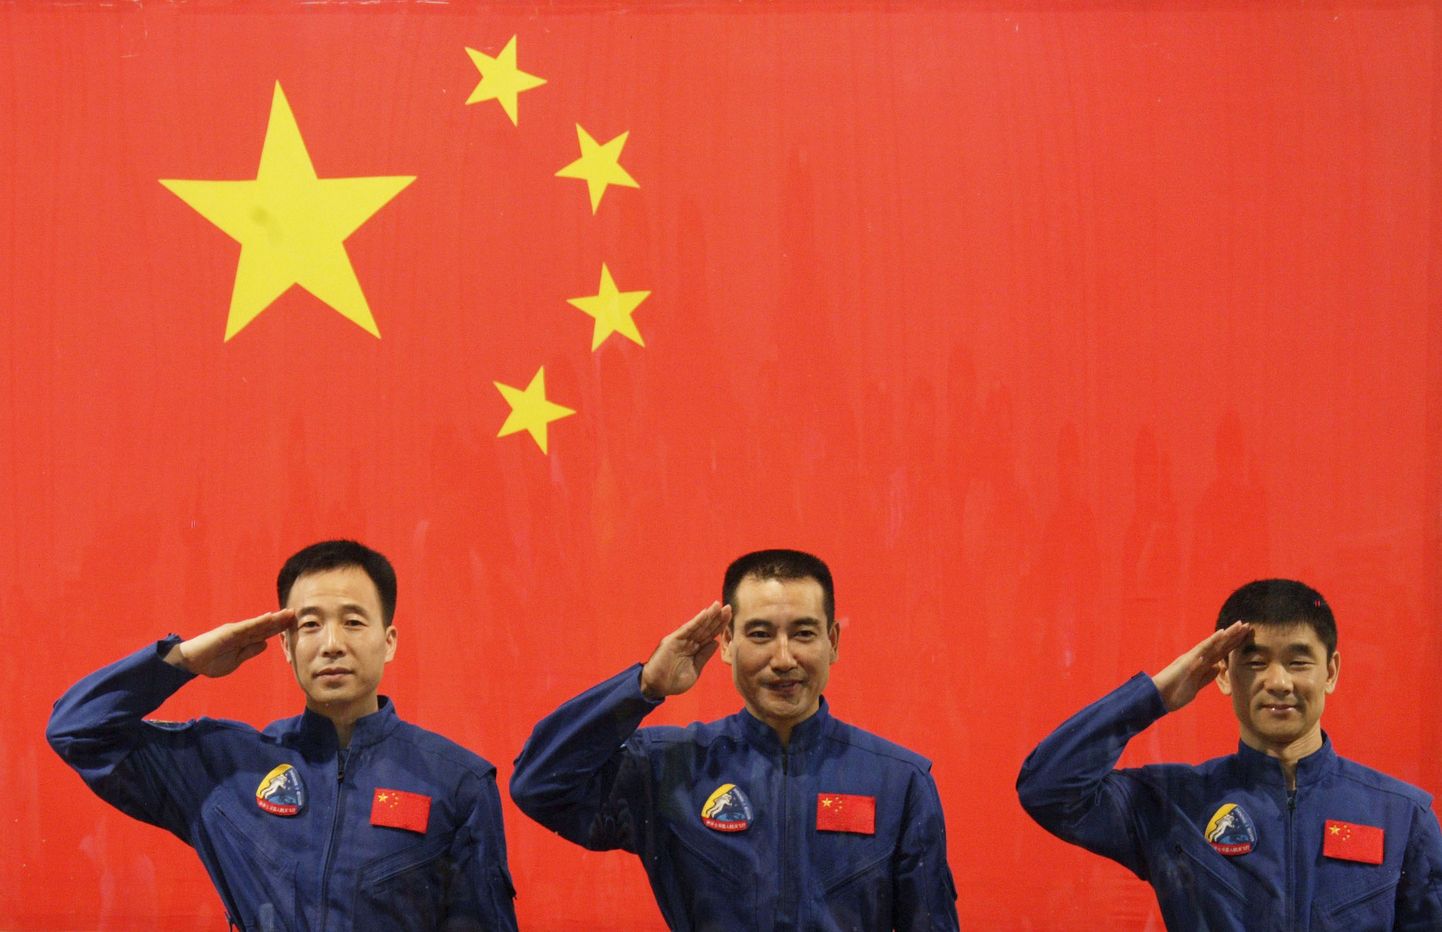 Hiina taikonaudid (vasakult) Jing Haipeng, Zhai Zhigang ja Liu Boming.